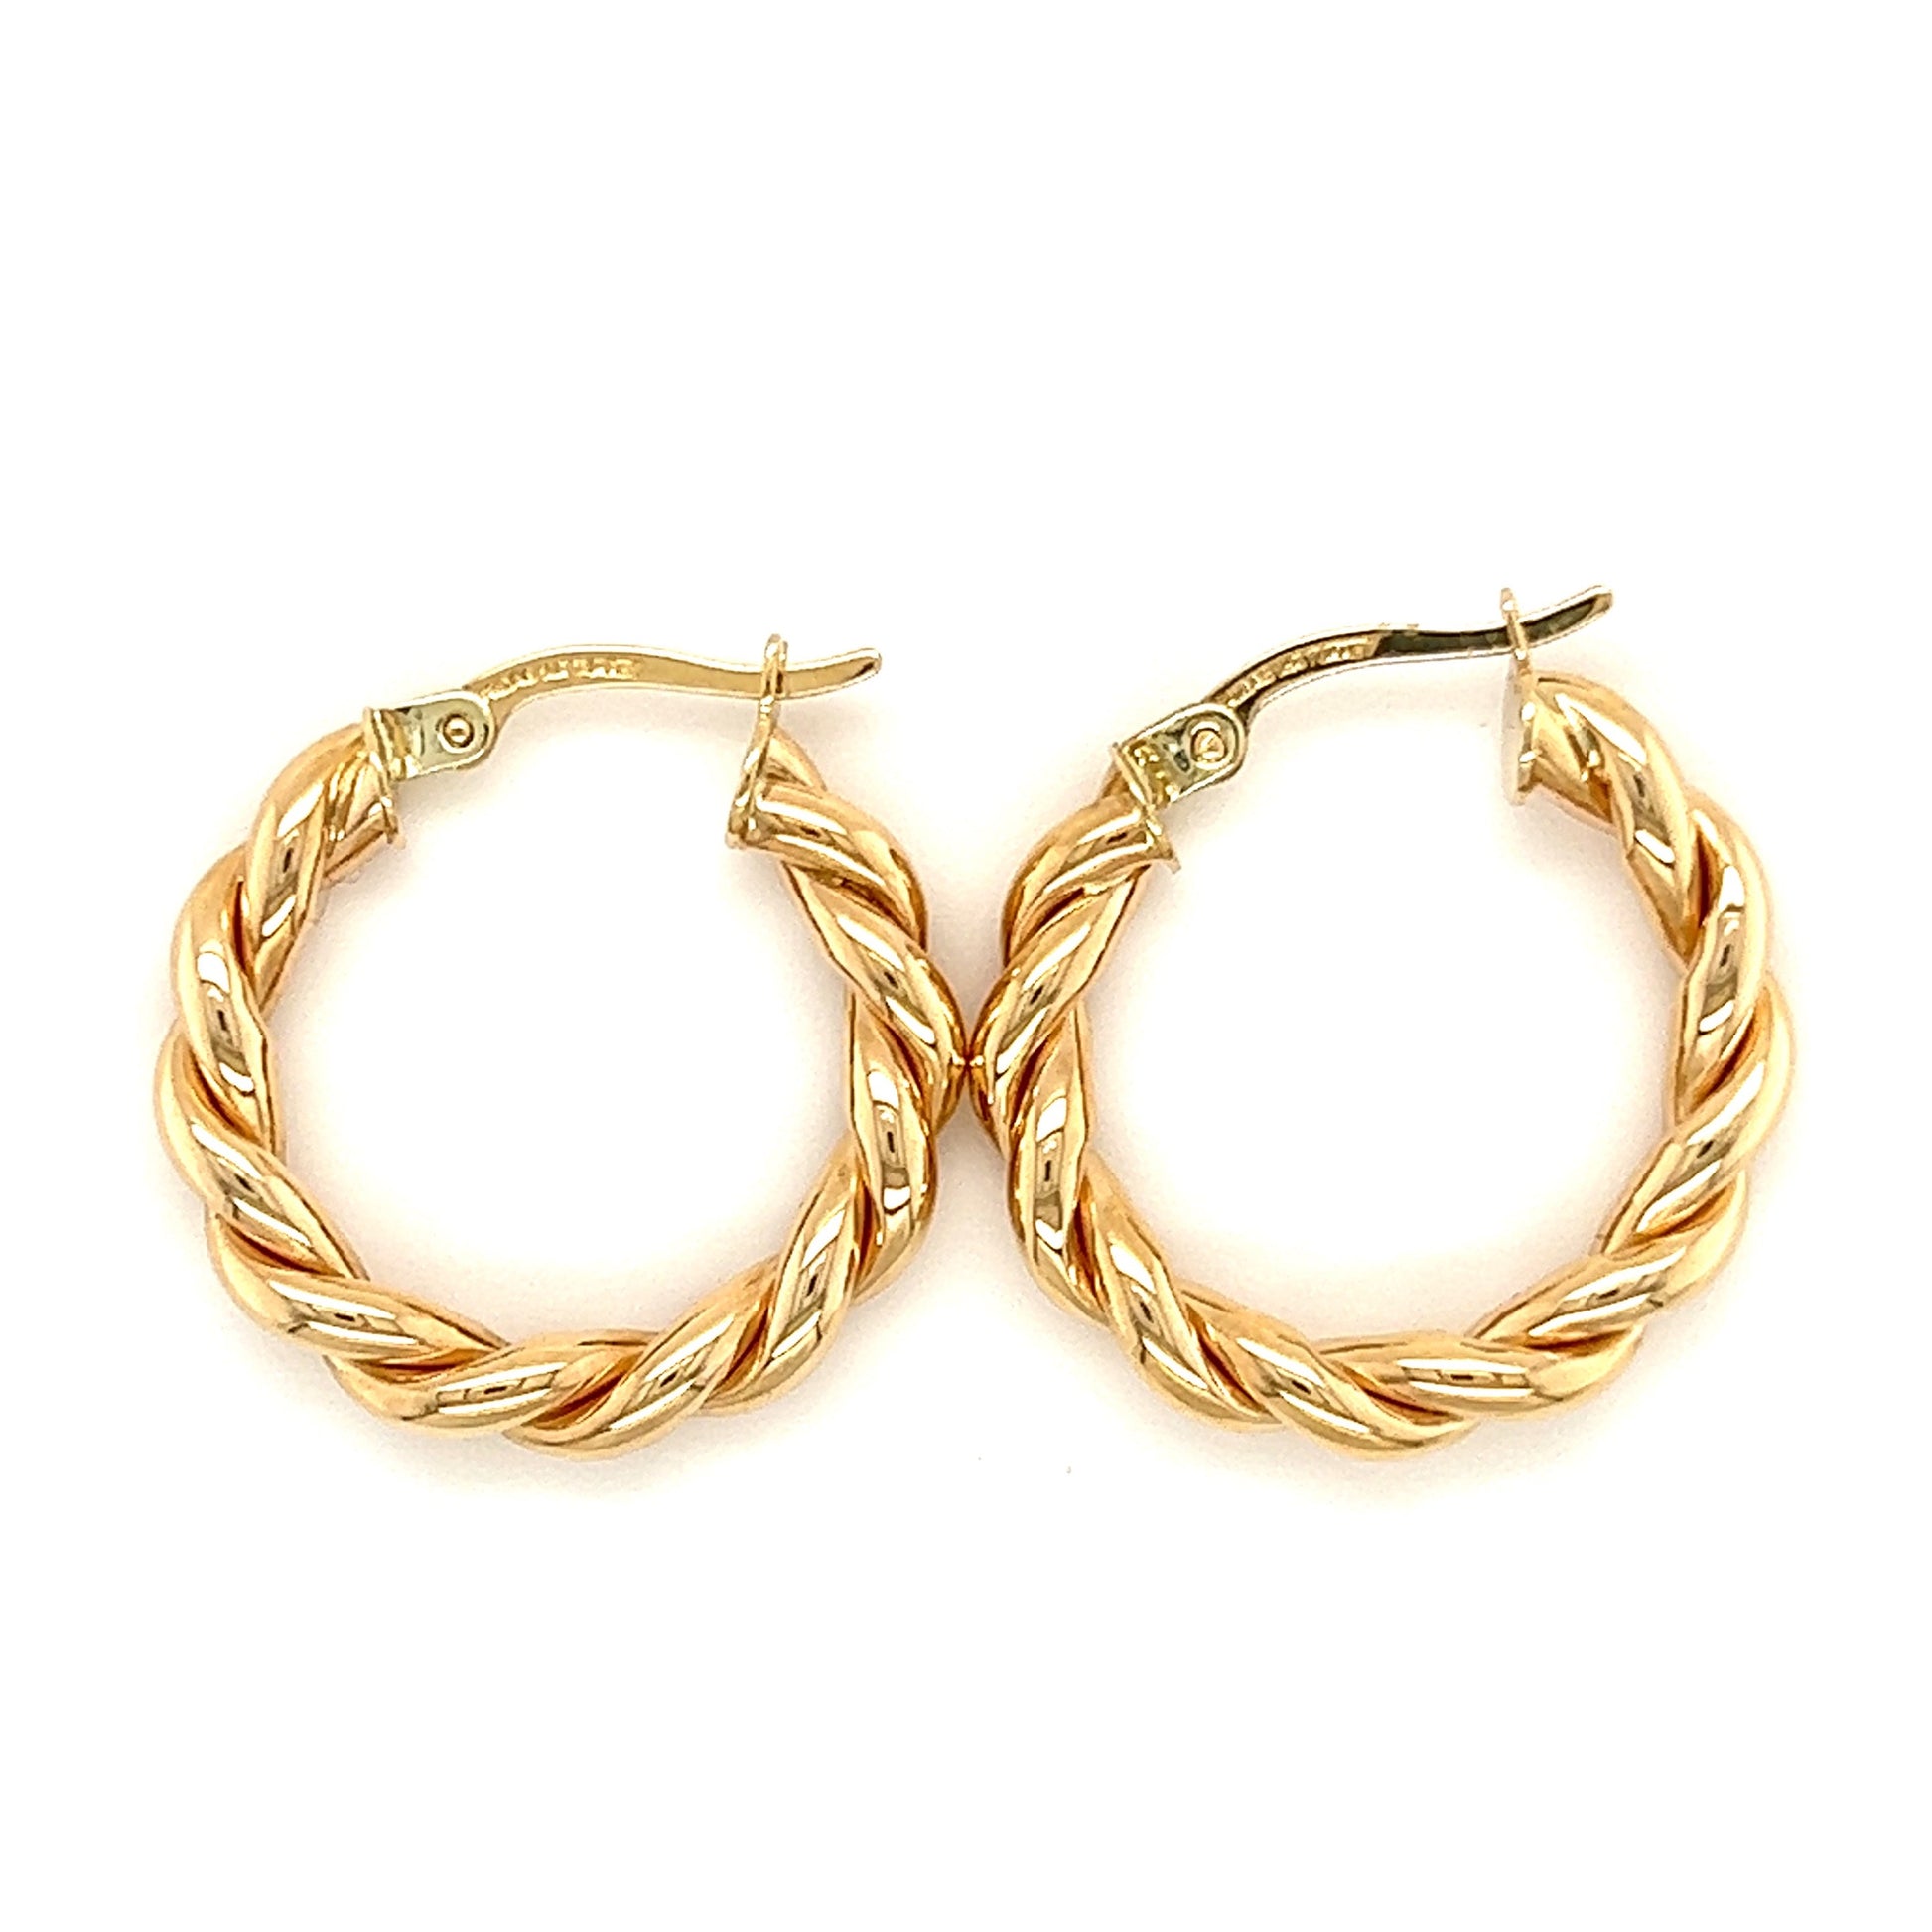 Twisted Hoop Earrings in 14K Yellow Gold Top View